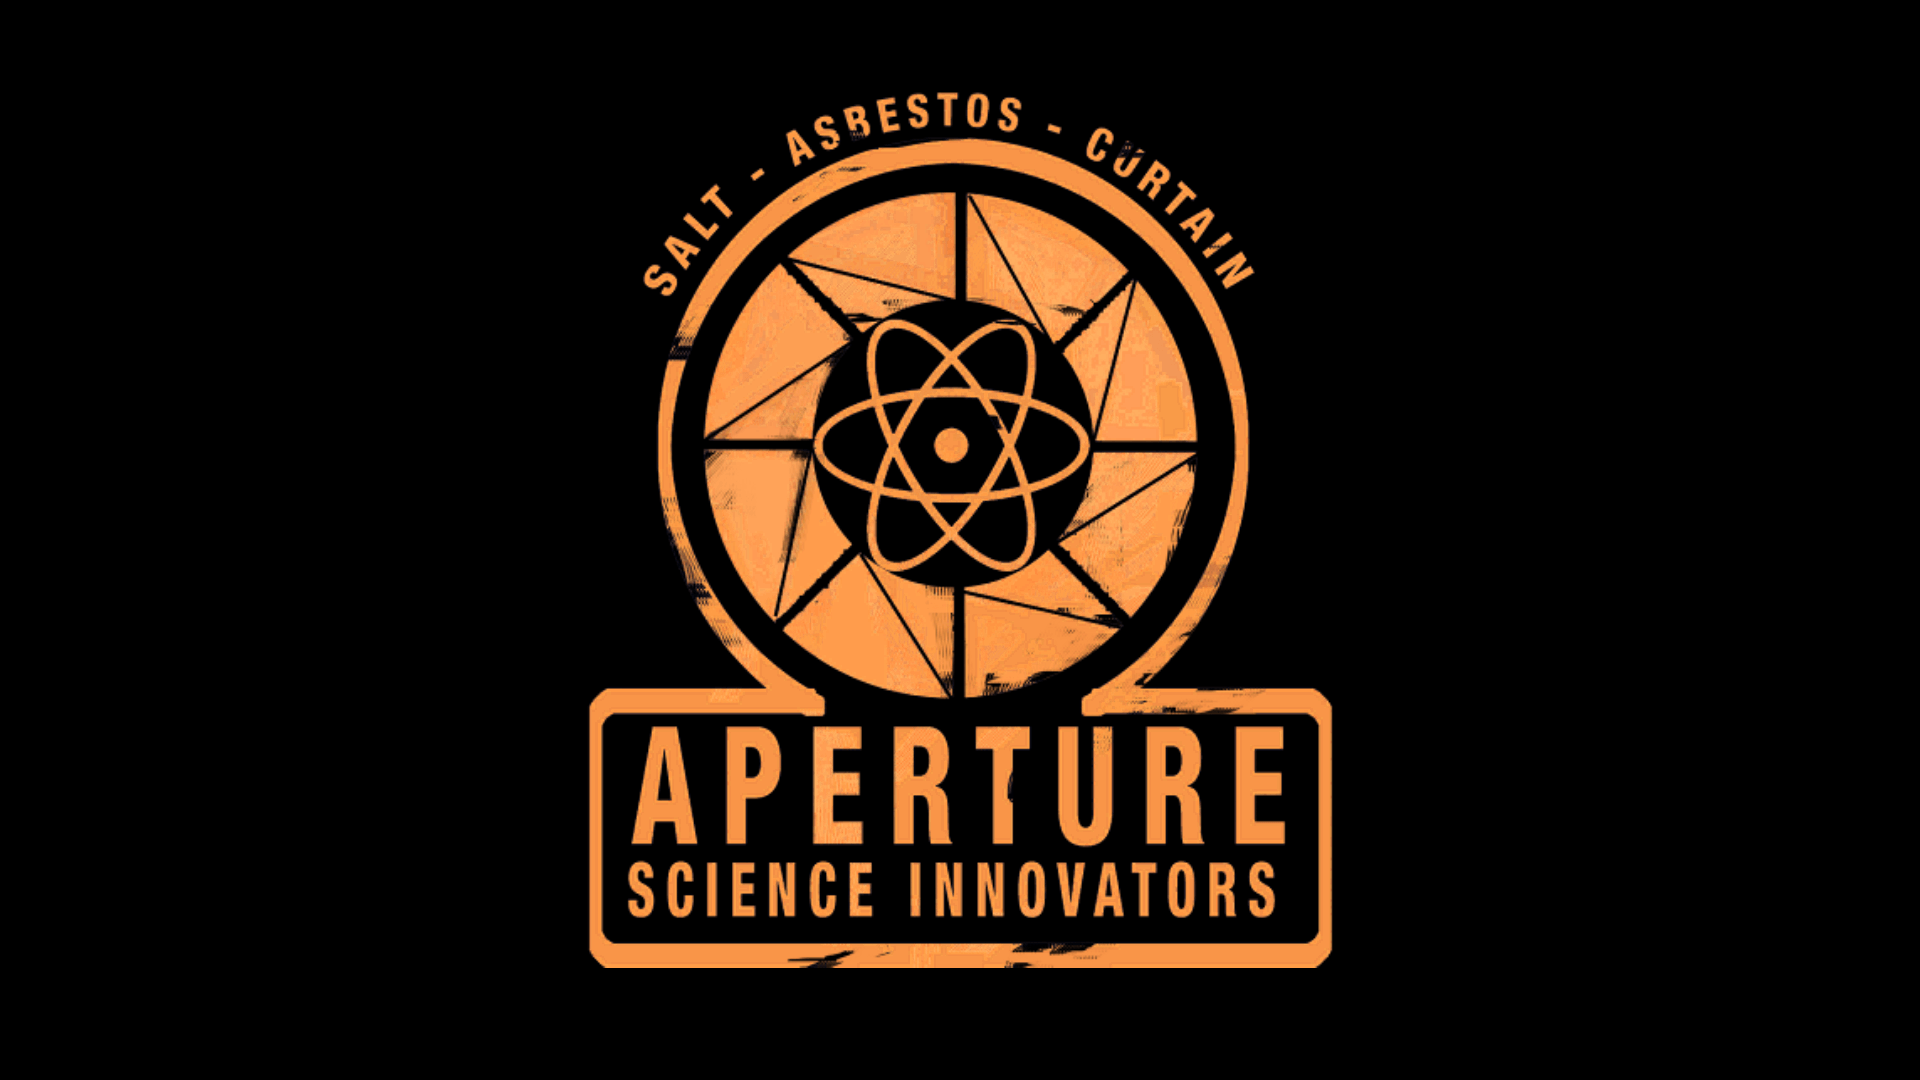 Portal 2 Aperture Laboratories Wallpaper 1920x1080 px Free